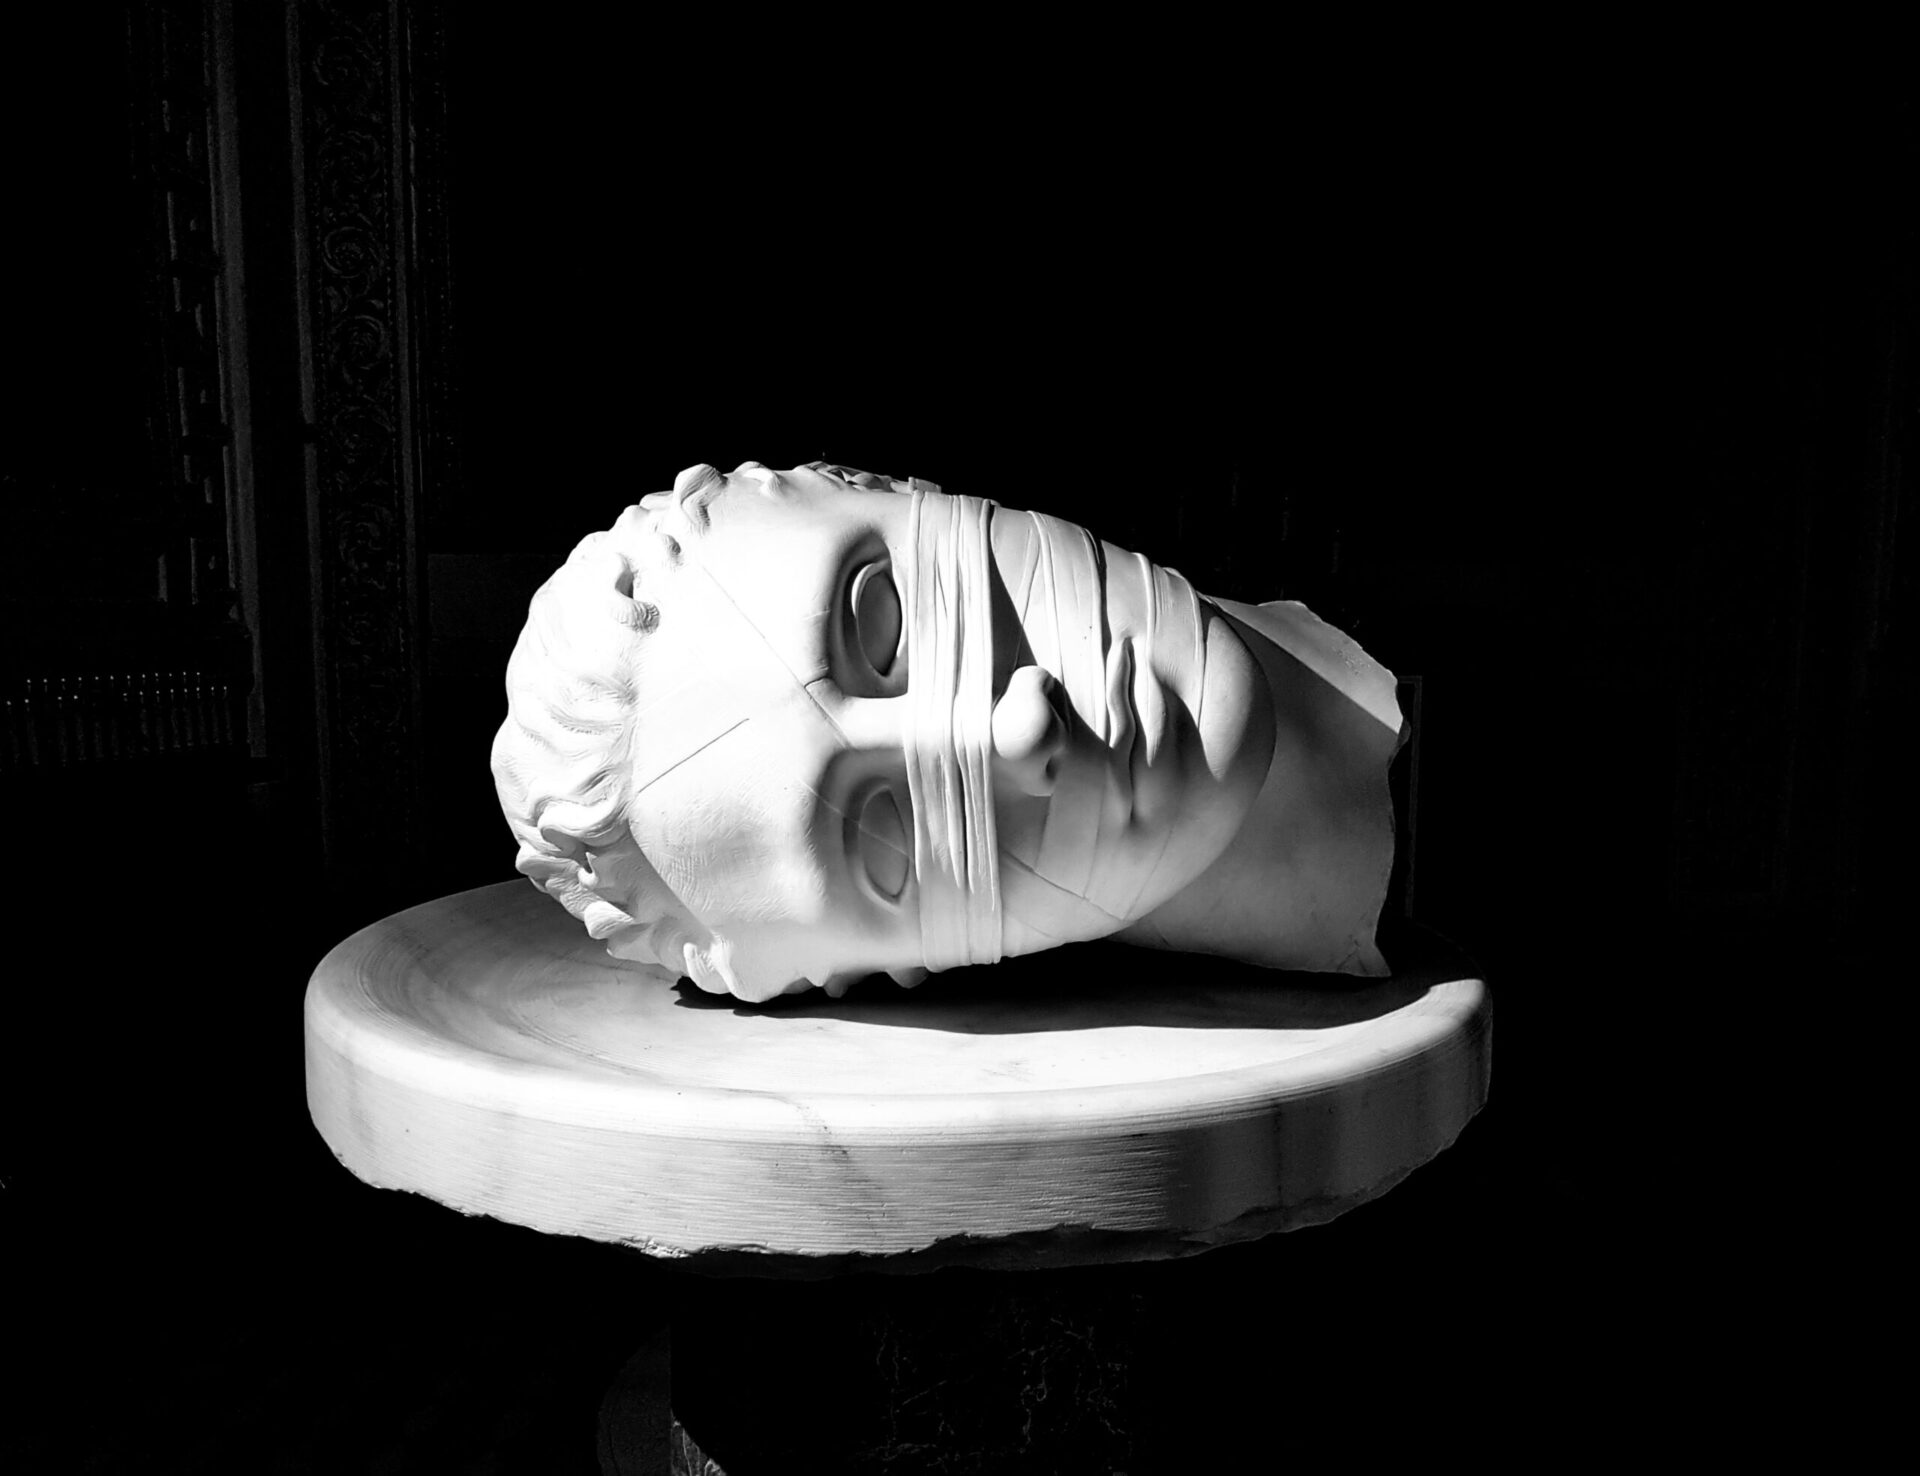 A white ceramic bust lays sideways on a white plinth against a black background.